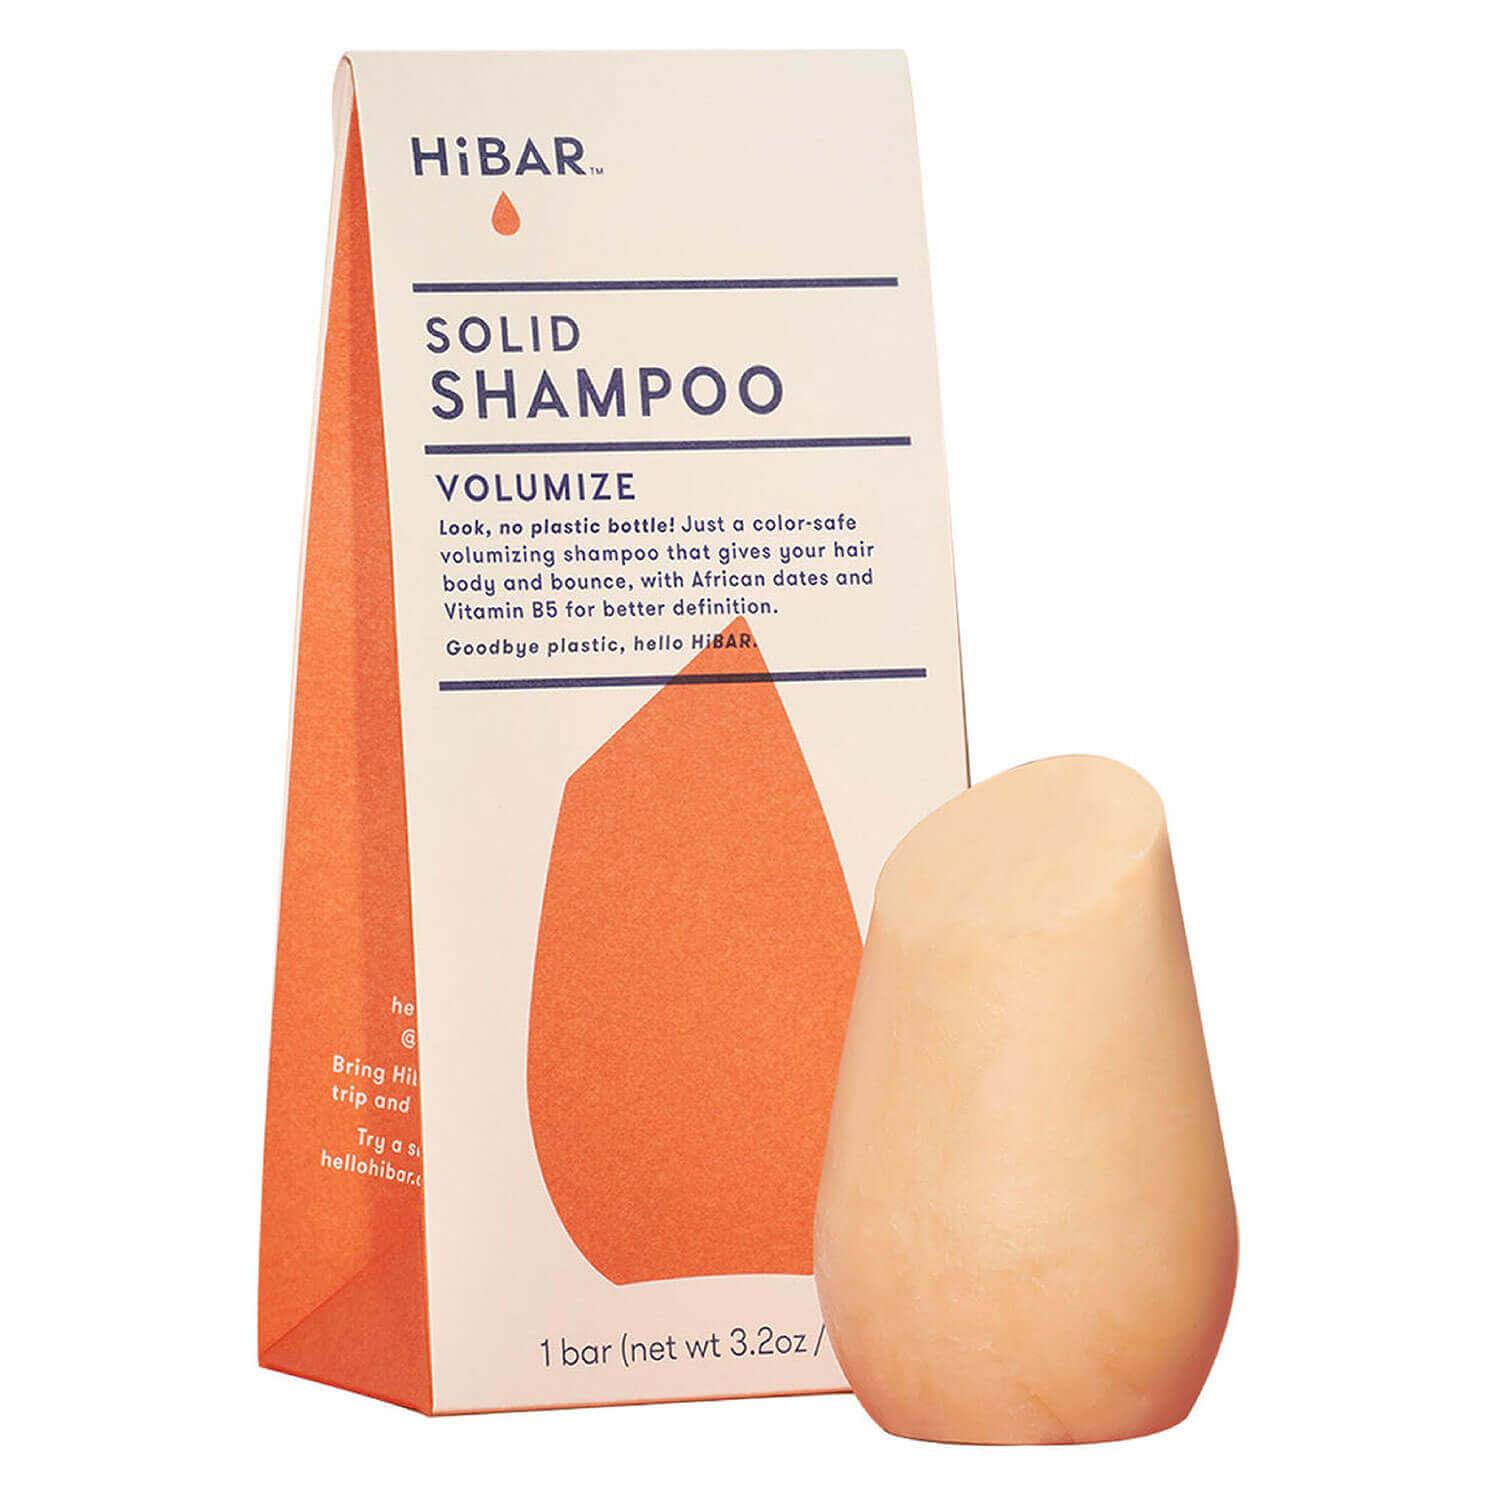 HiBAR - VOLUMIZE shampooing volumineux solide